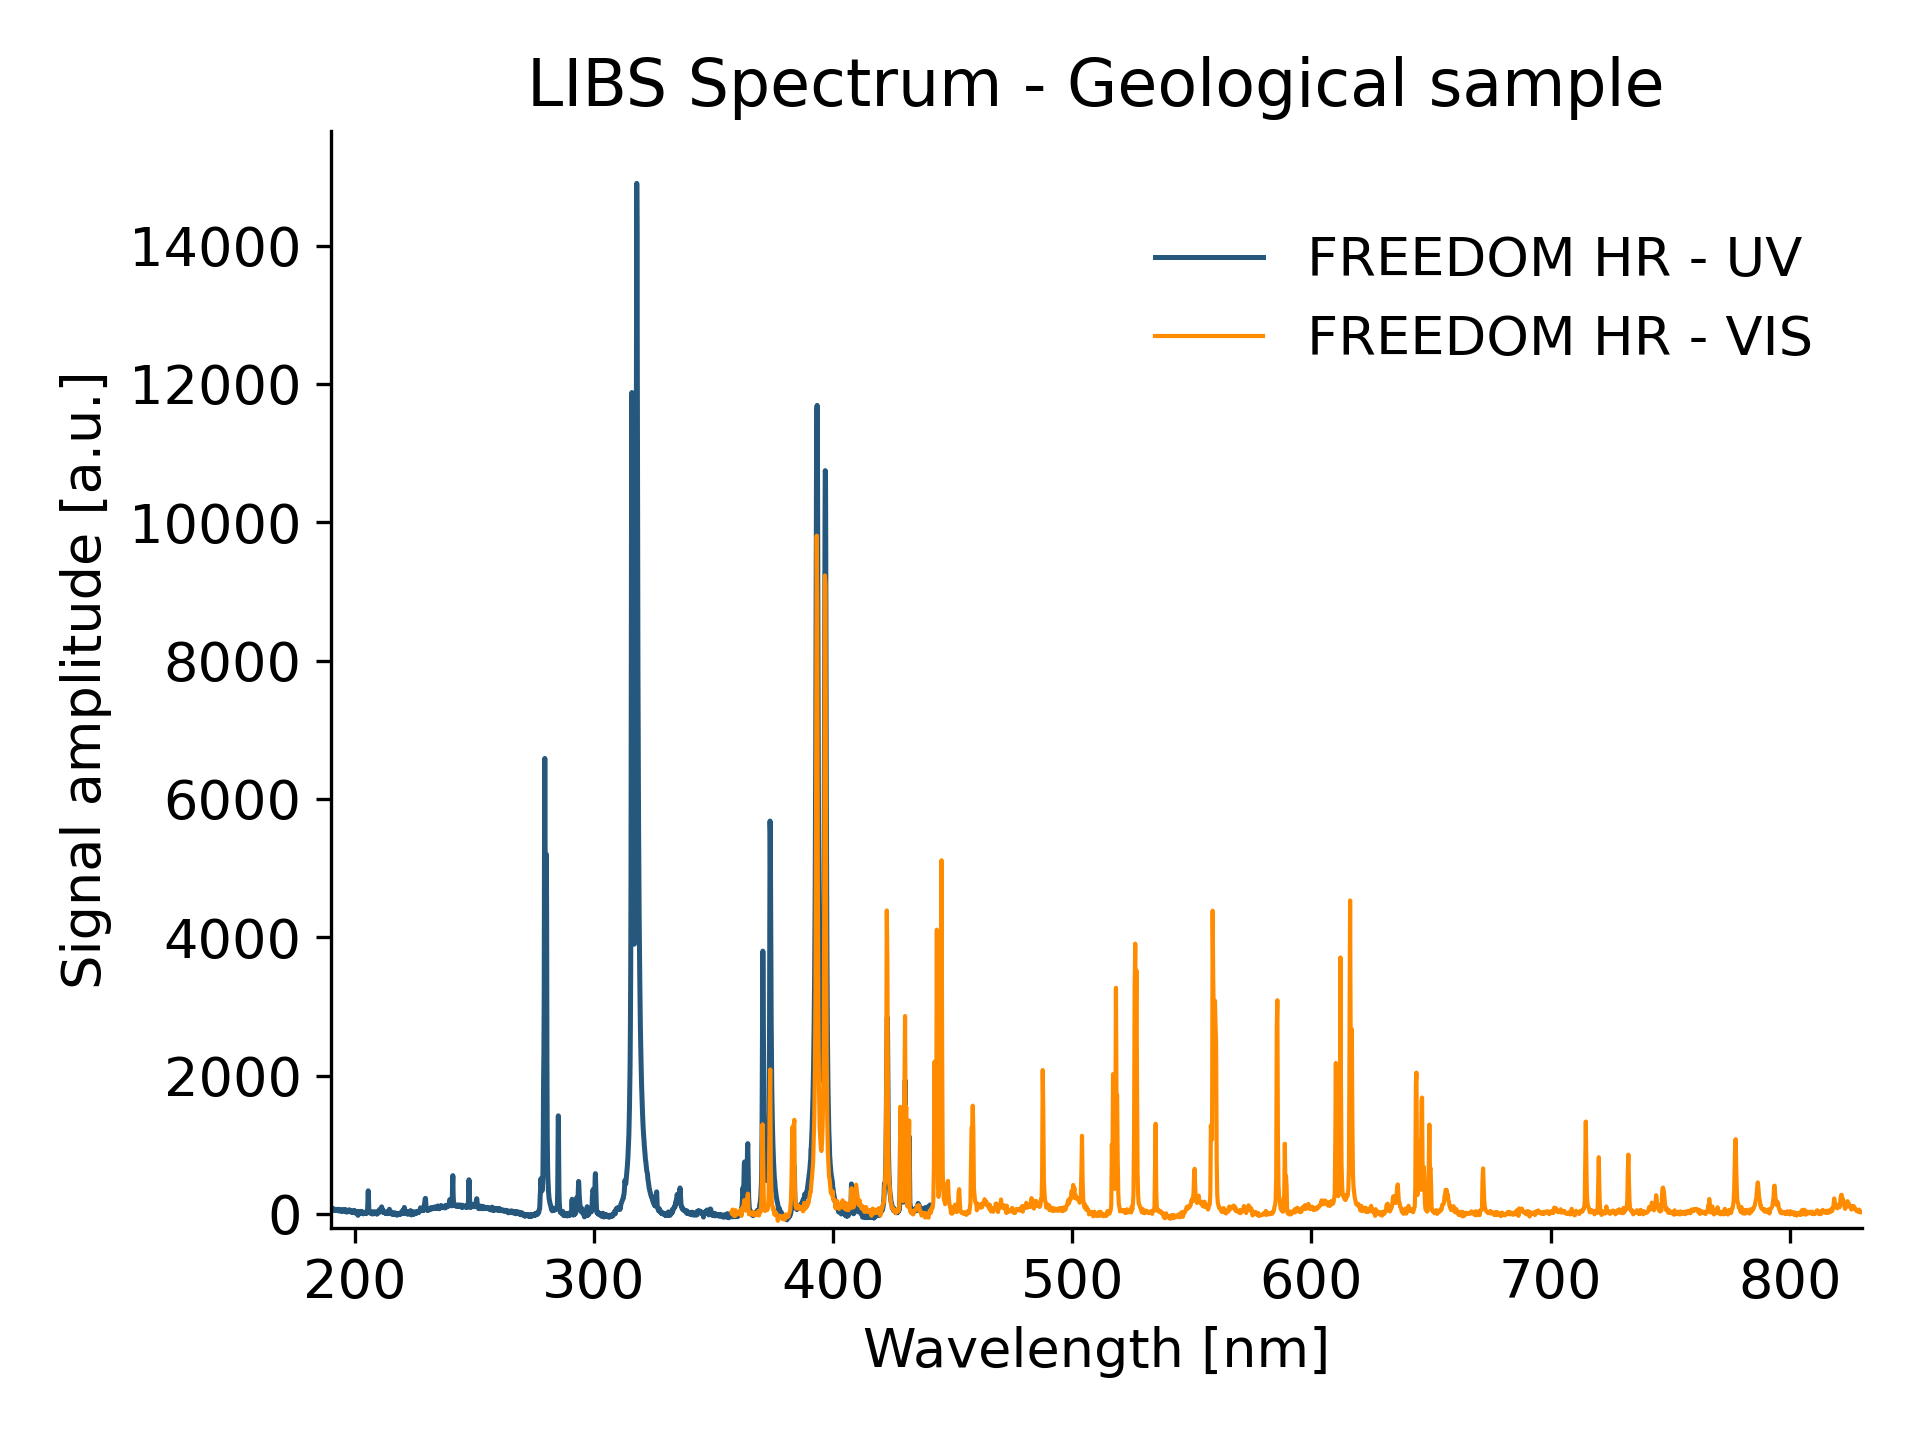 LIBS spectrum - Geological sample